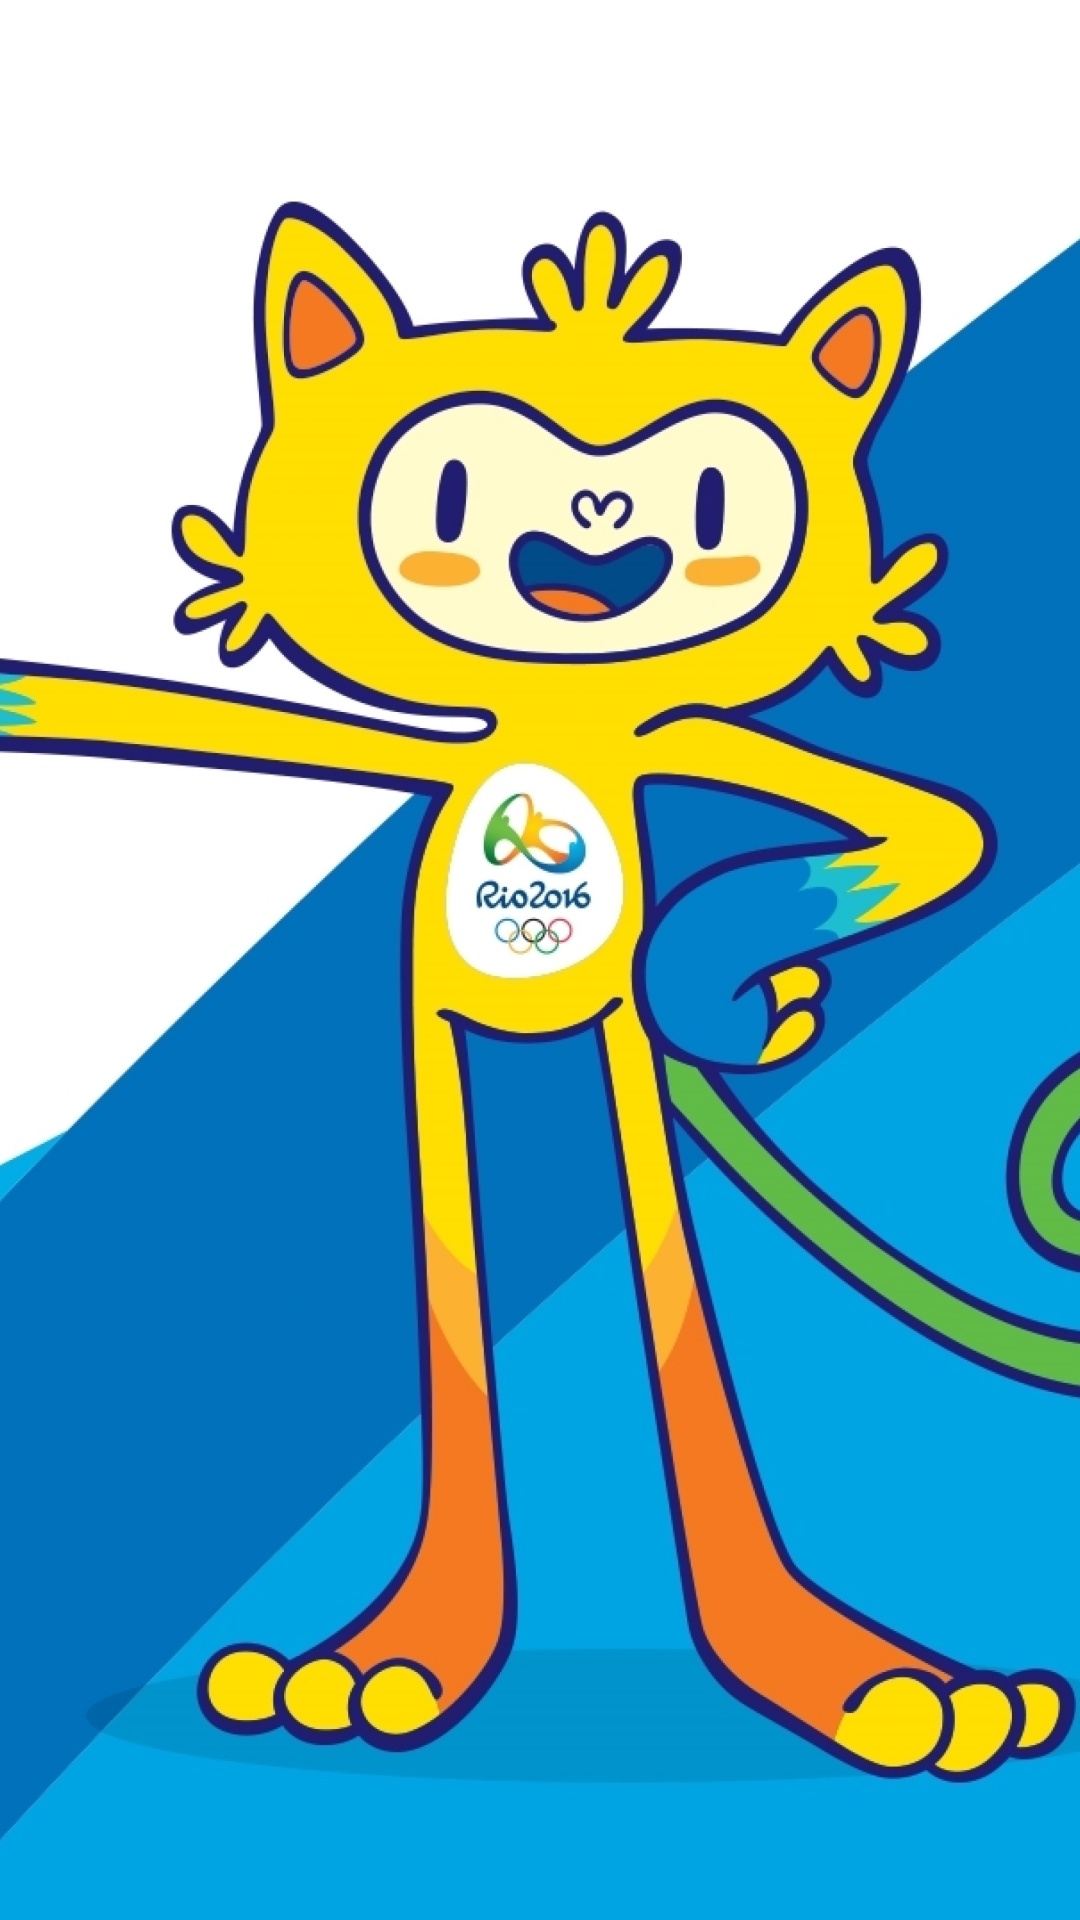 Olympics Mascot Vinicius Rio 2016 wallpaper 1080x1920